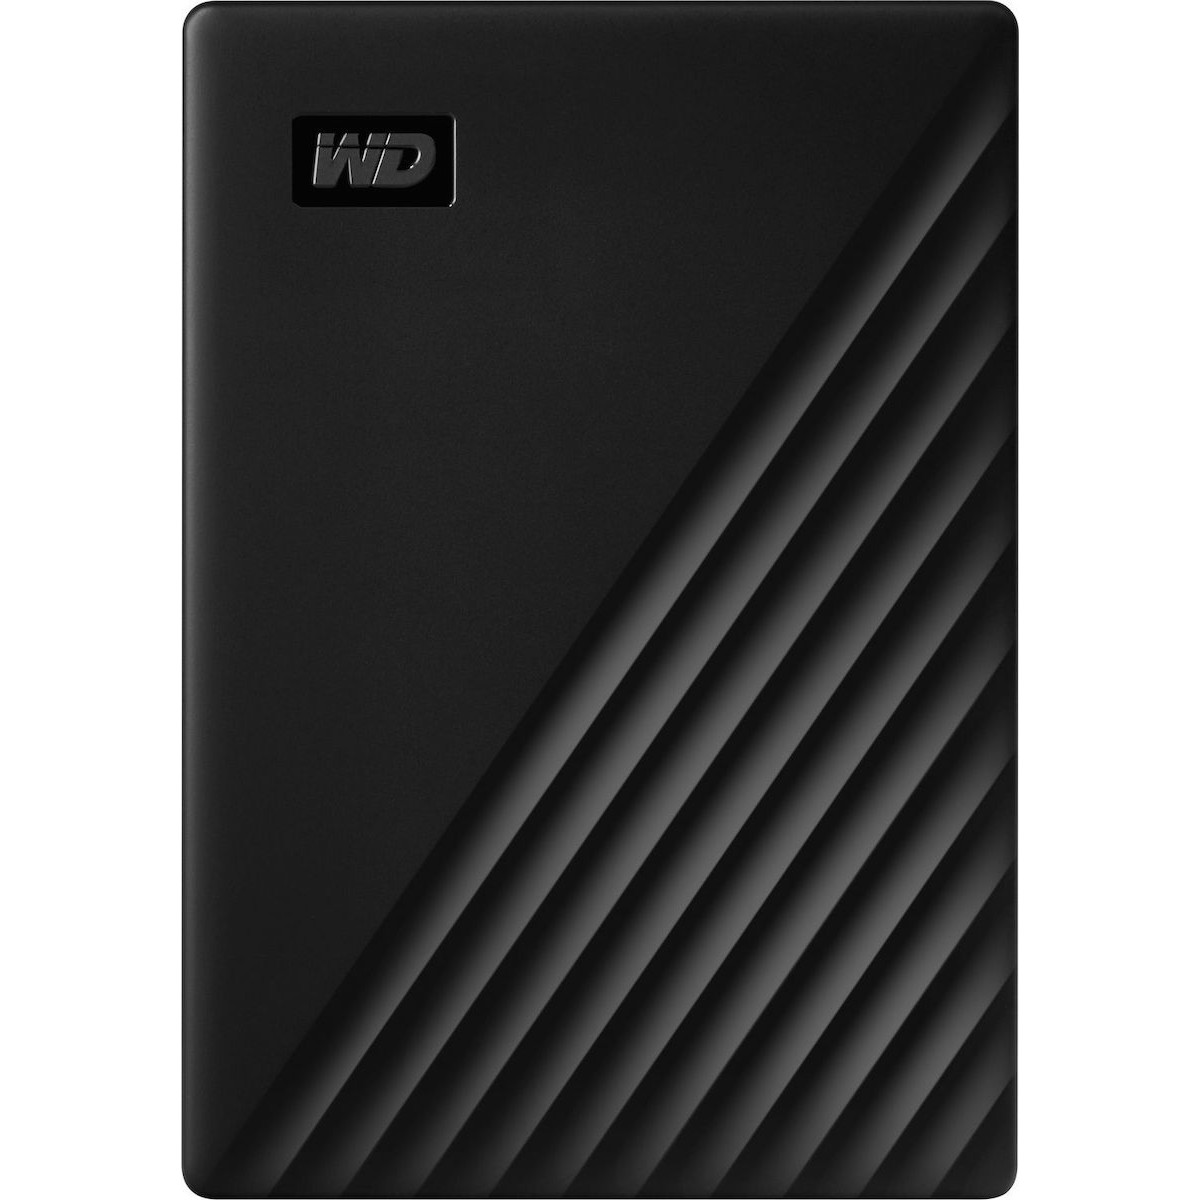 HDD EXTERN WD MY PASSPORT 4TB 2019 BLACK WDBPKJ0040BBK-WESN